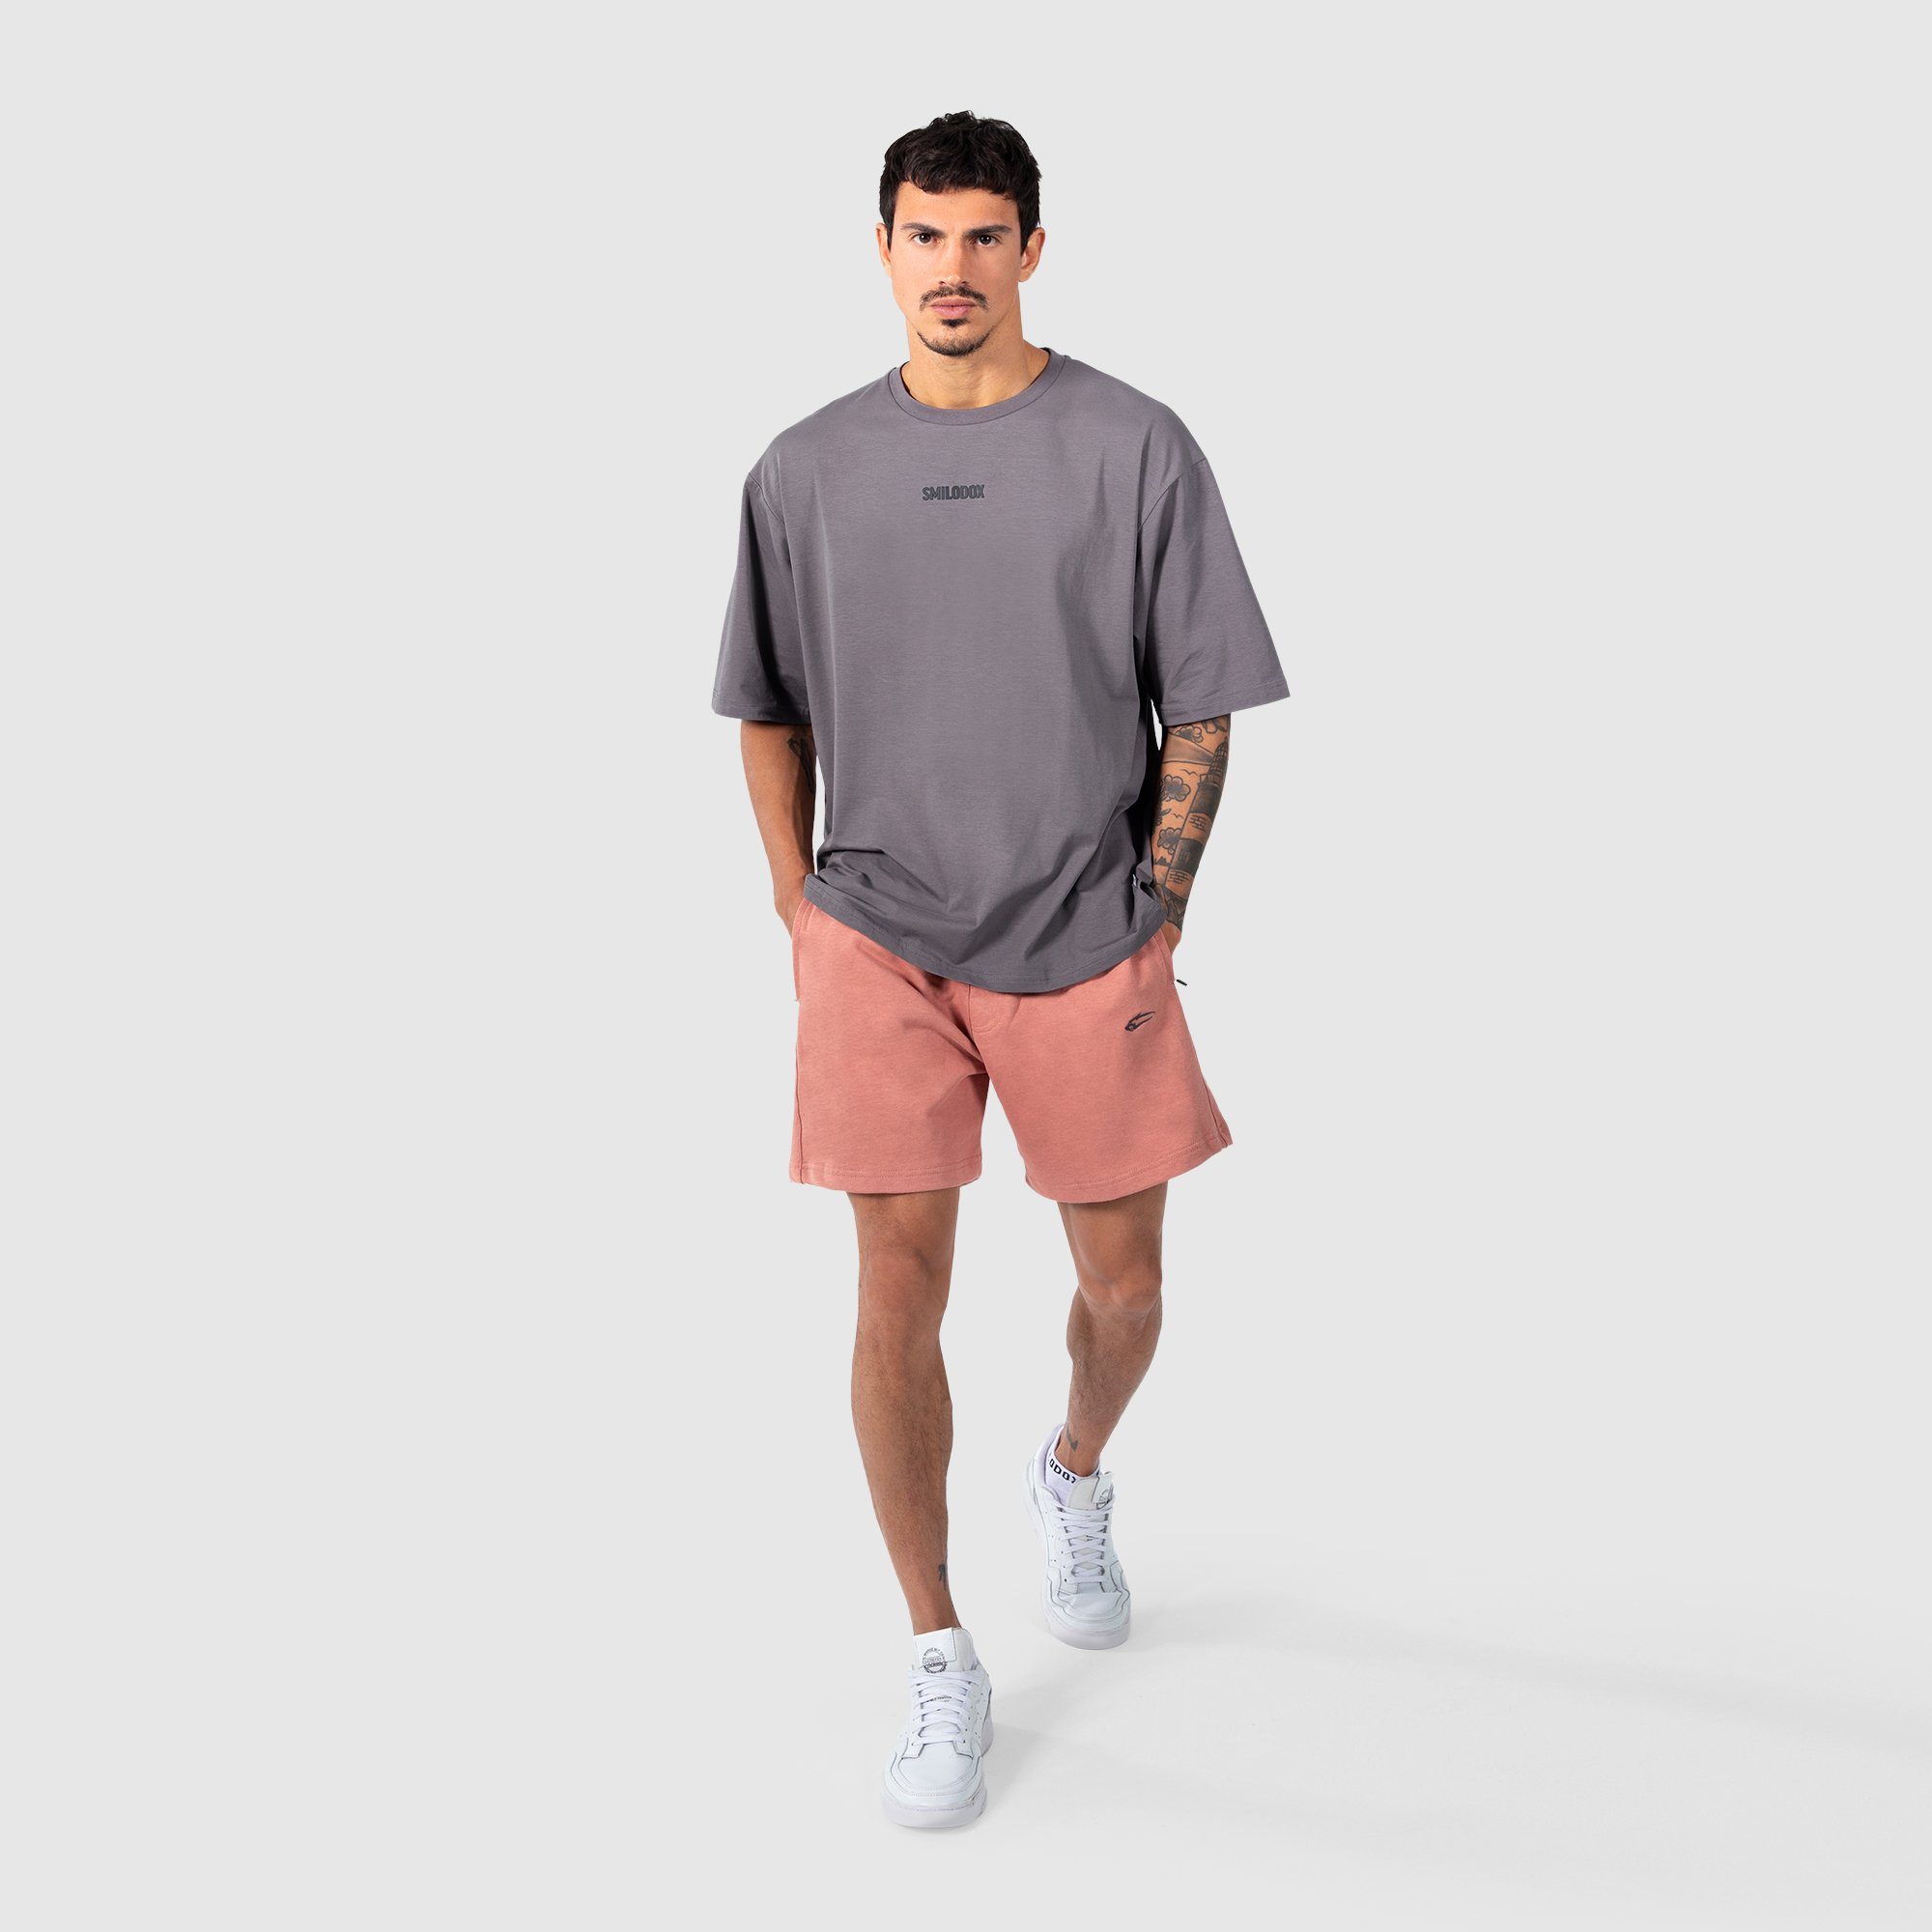 Smilodox T-Shirt Time Off Oversize Grau